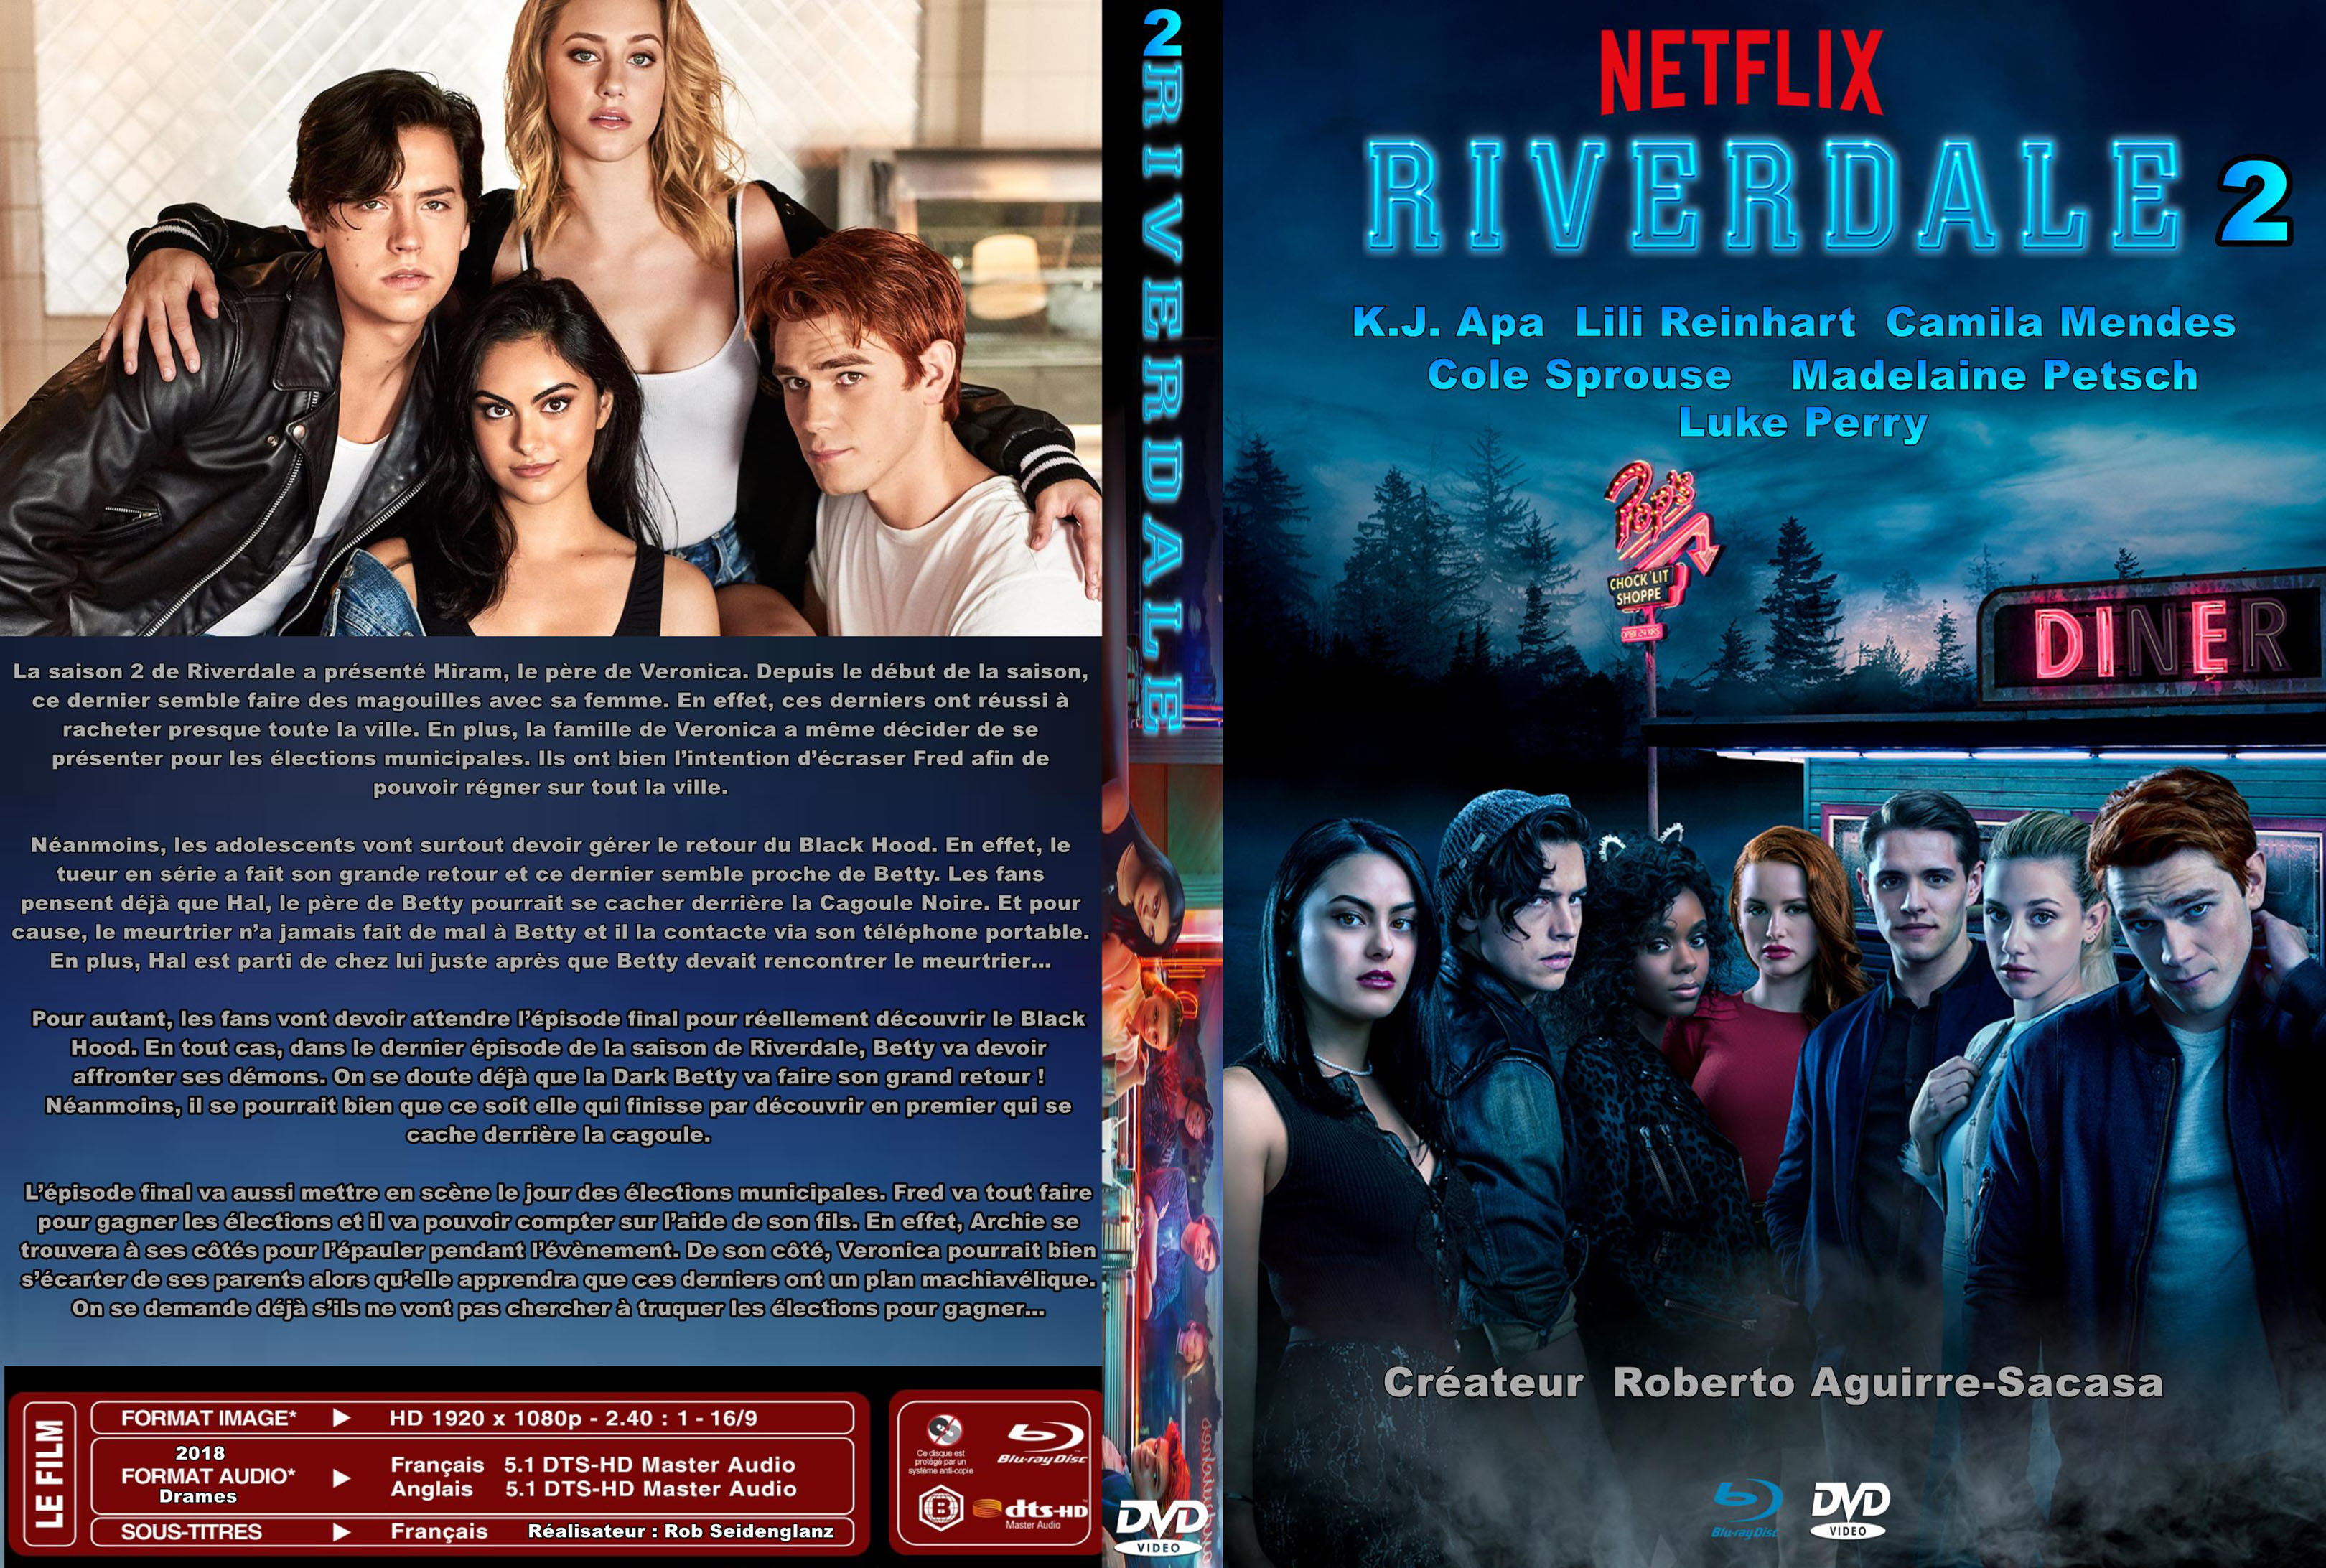 Jaquette DVD Riverdale saison 2 custom v2